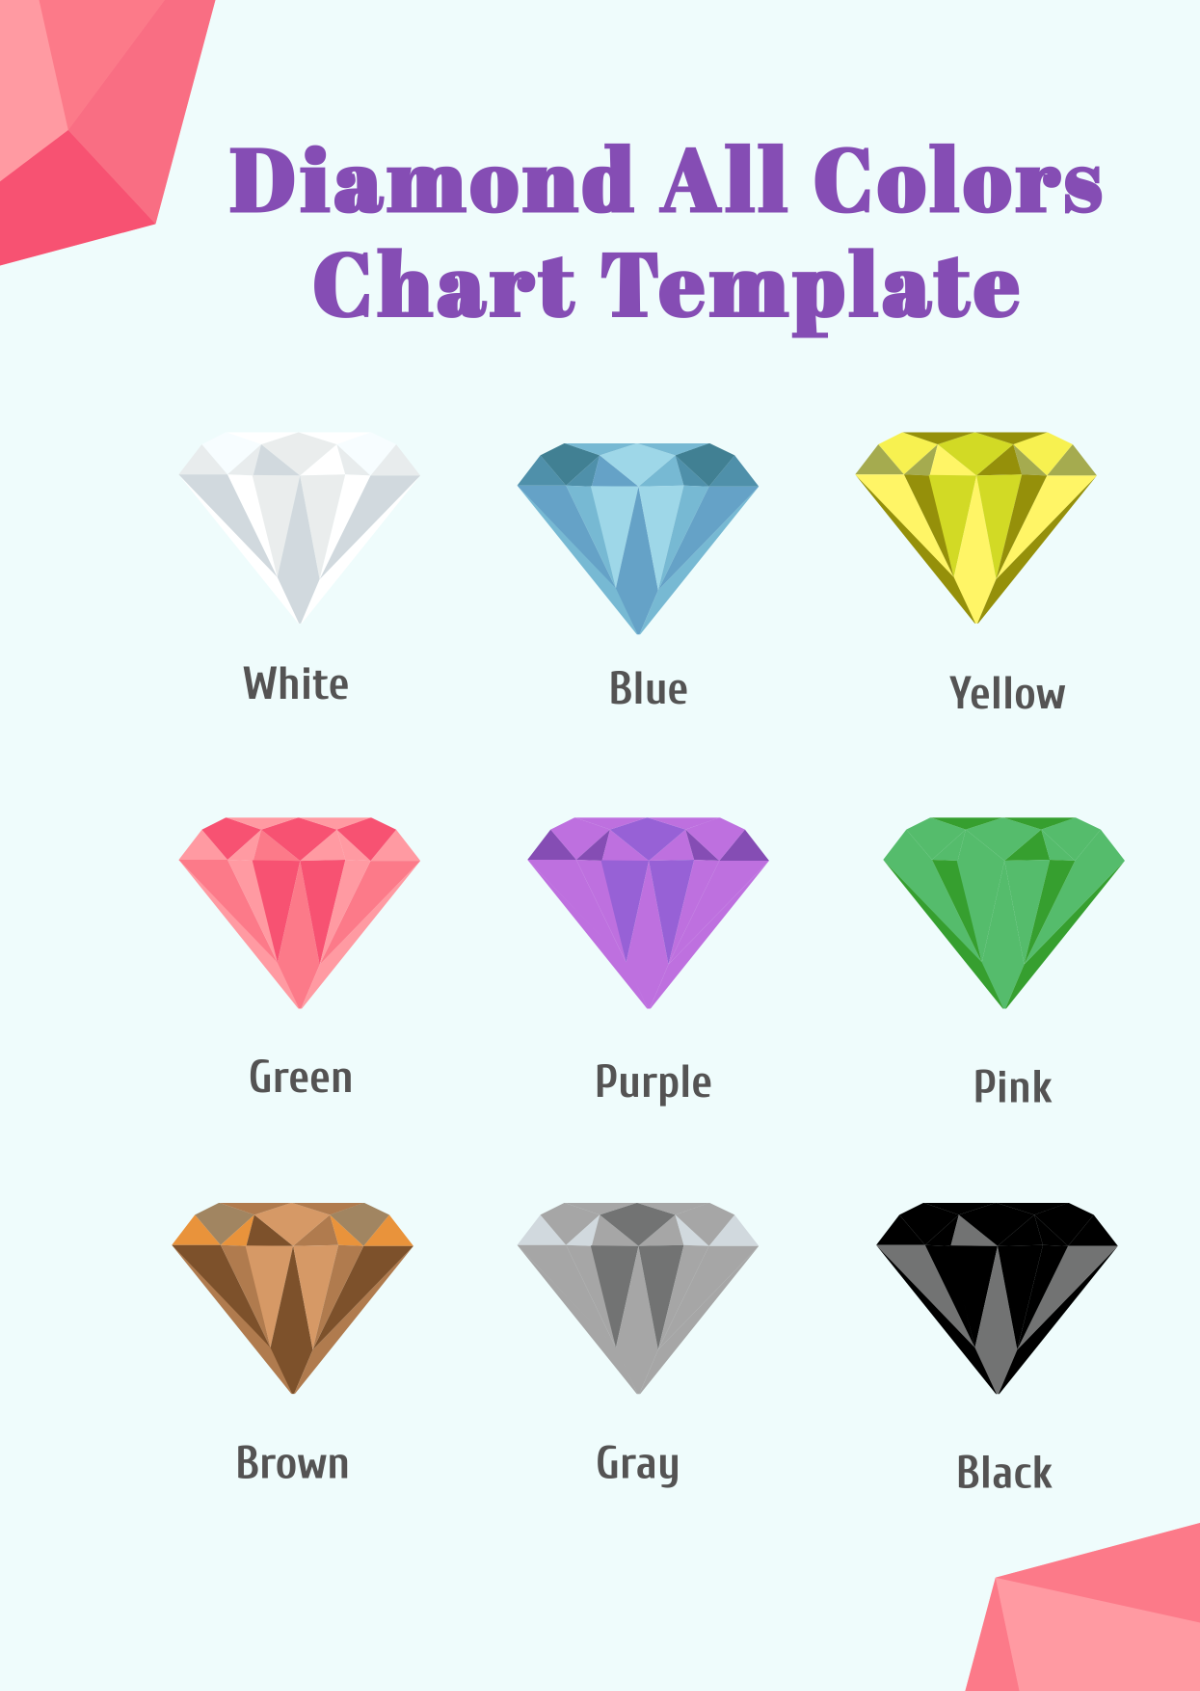 Diamond All Colors Chart